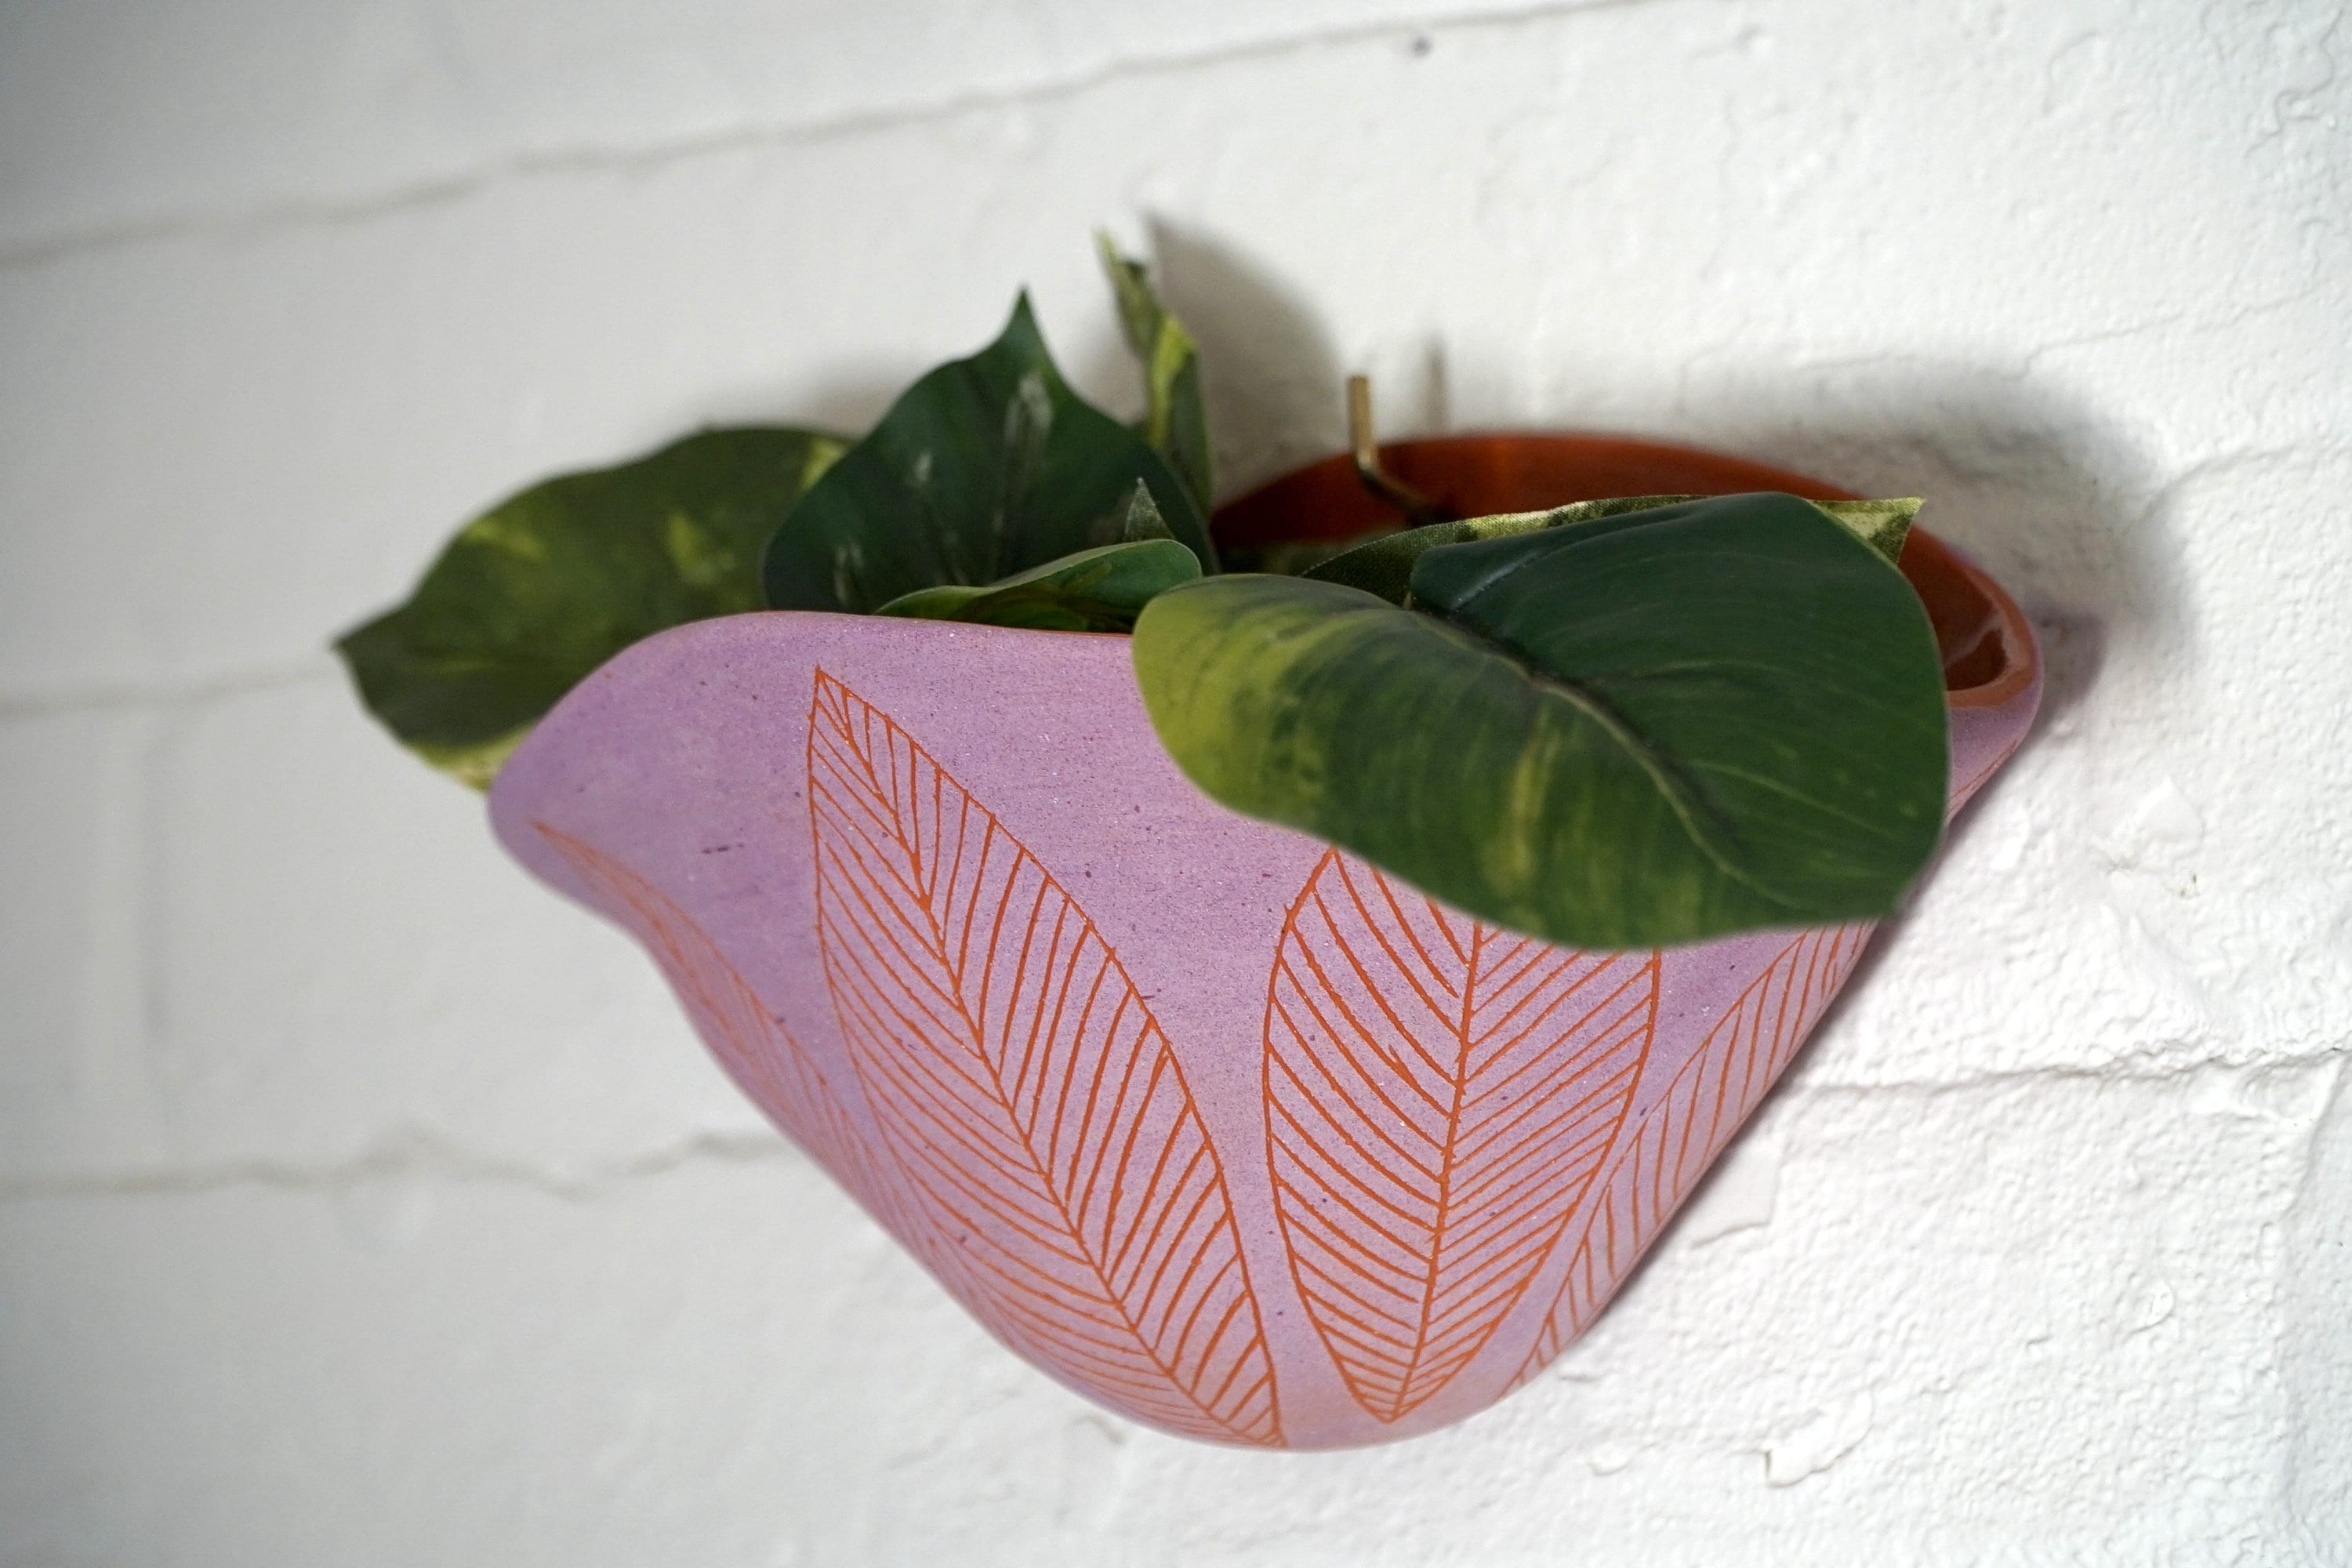 Purple & Terracotta Wall Pocket Planter w/ "Leaf" Design - Ceramic Wall Planter - Pottery - Succulent Pot - Houseplant - Planter